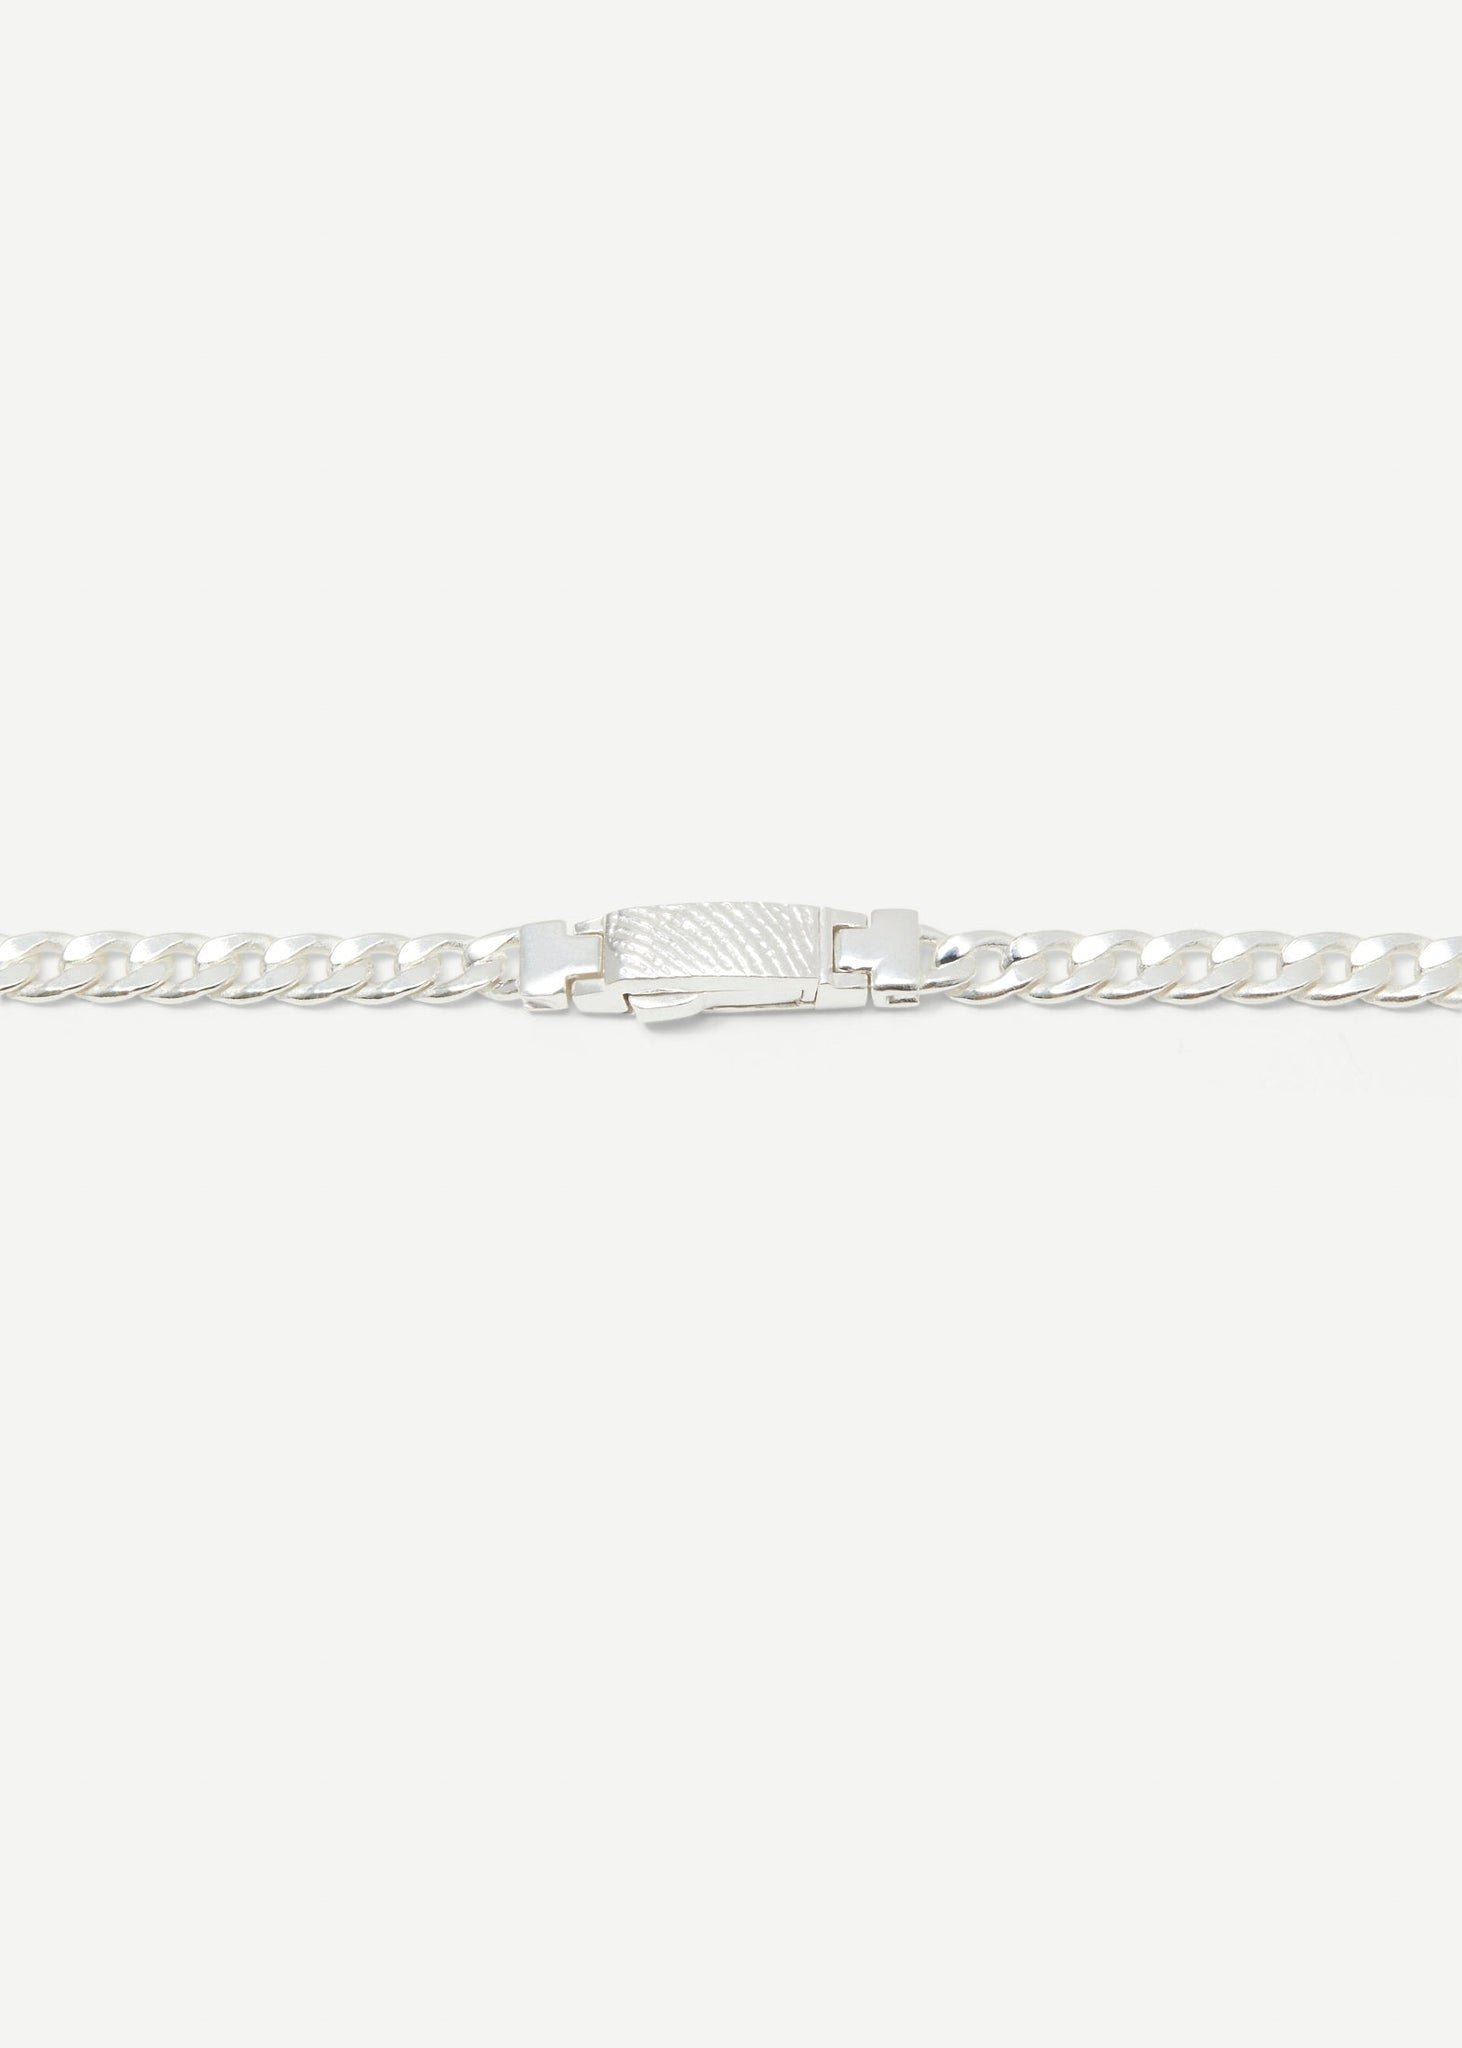 Molded Chained Necklace Mini - Necklaces - Cornelia Webb - 2